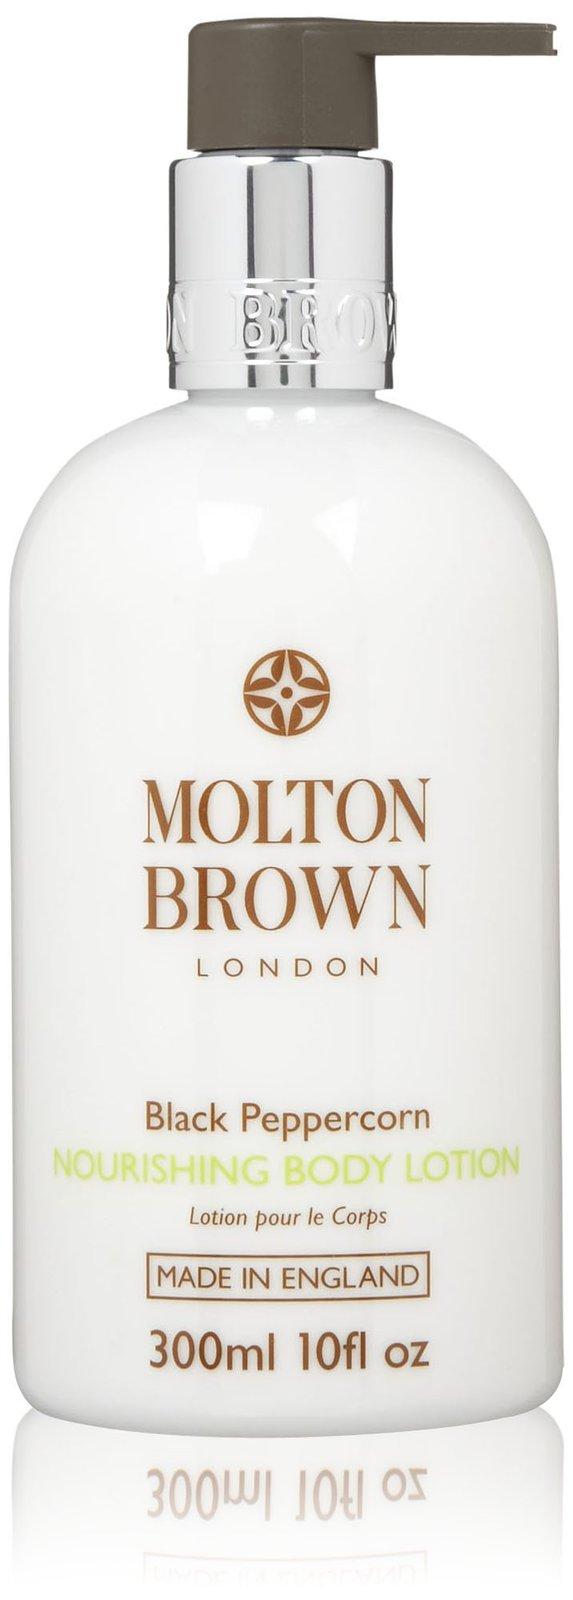 Molton Brown Black Peppercorn Body Lotion